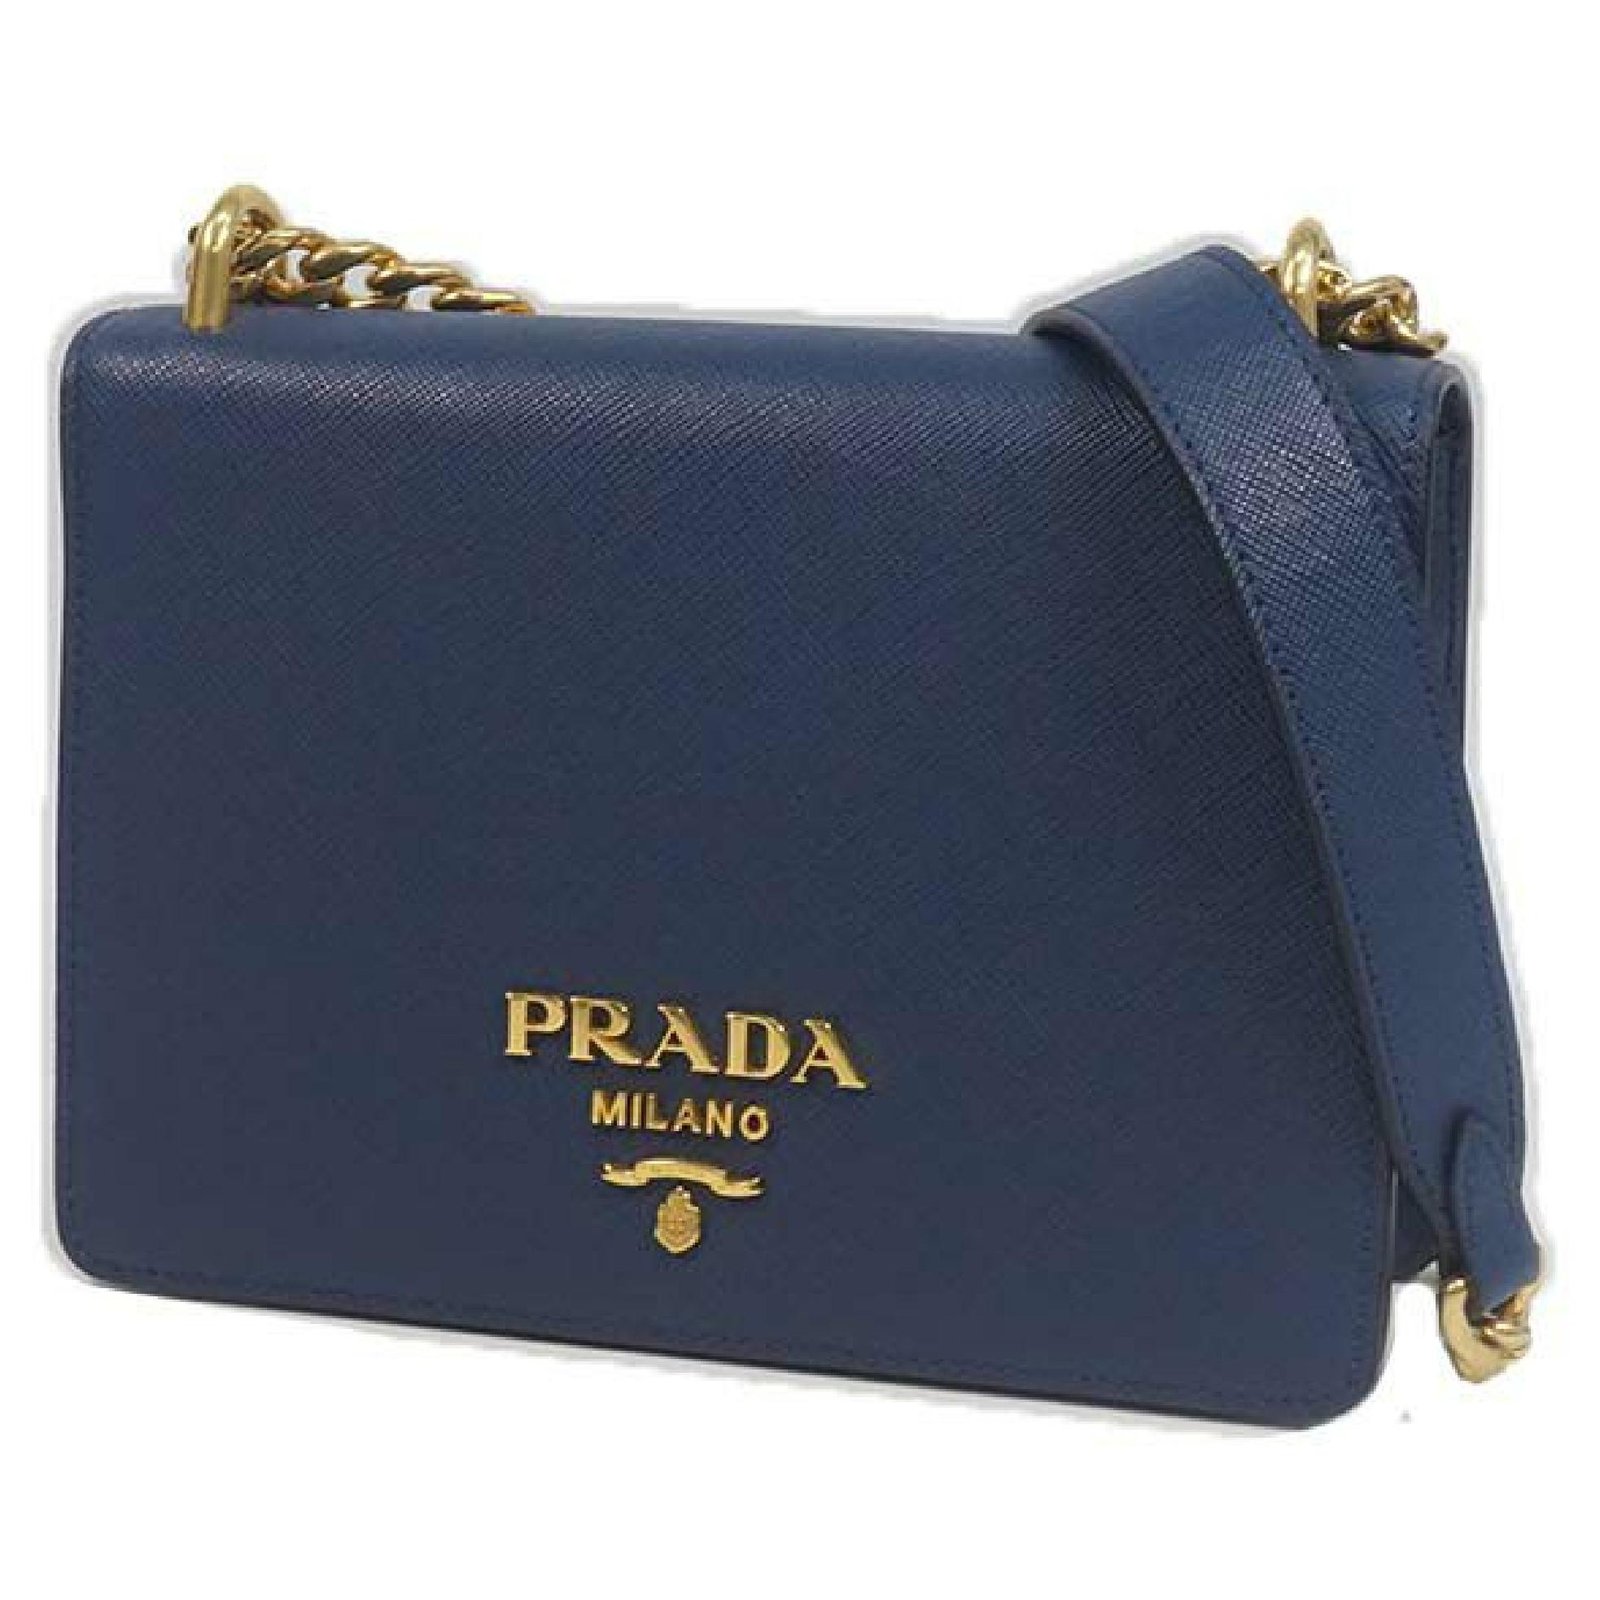 Prada Pattina Patent Saffiano Leather Shoulder Bag, Ink Blue